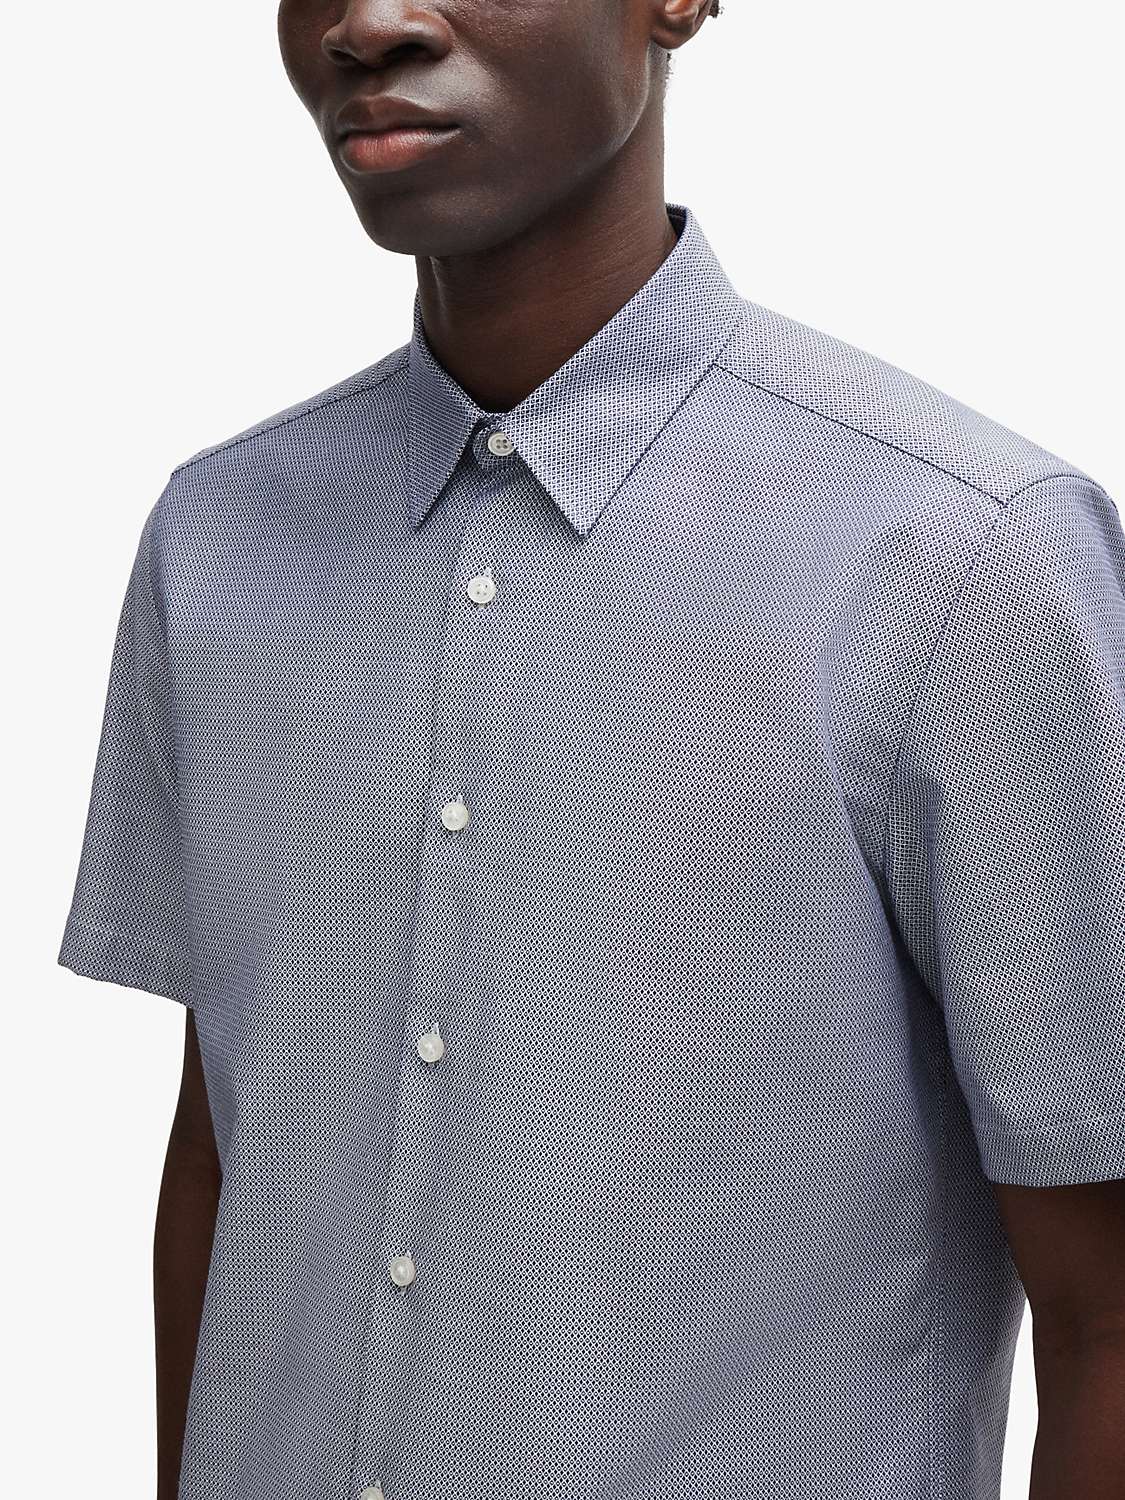 Buy BOSS Liam Regular Fit Shirt, Navy Online at johnlewis.com